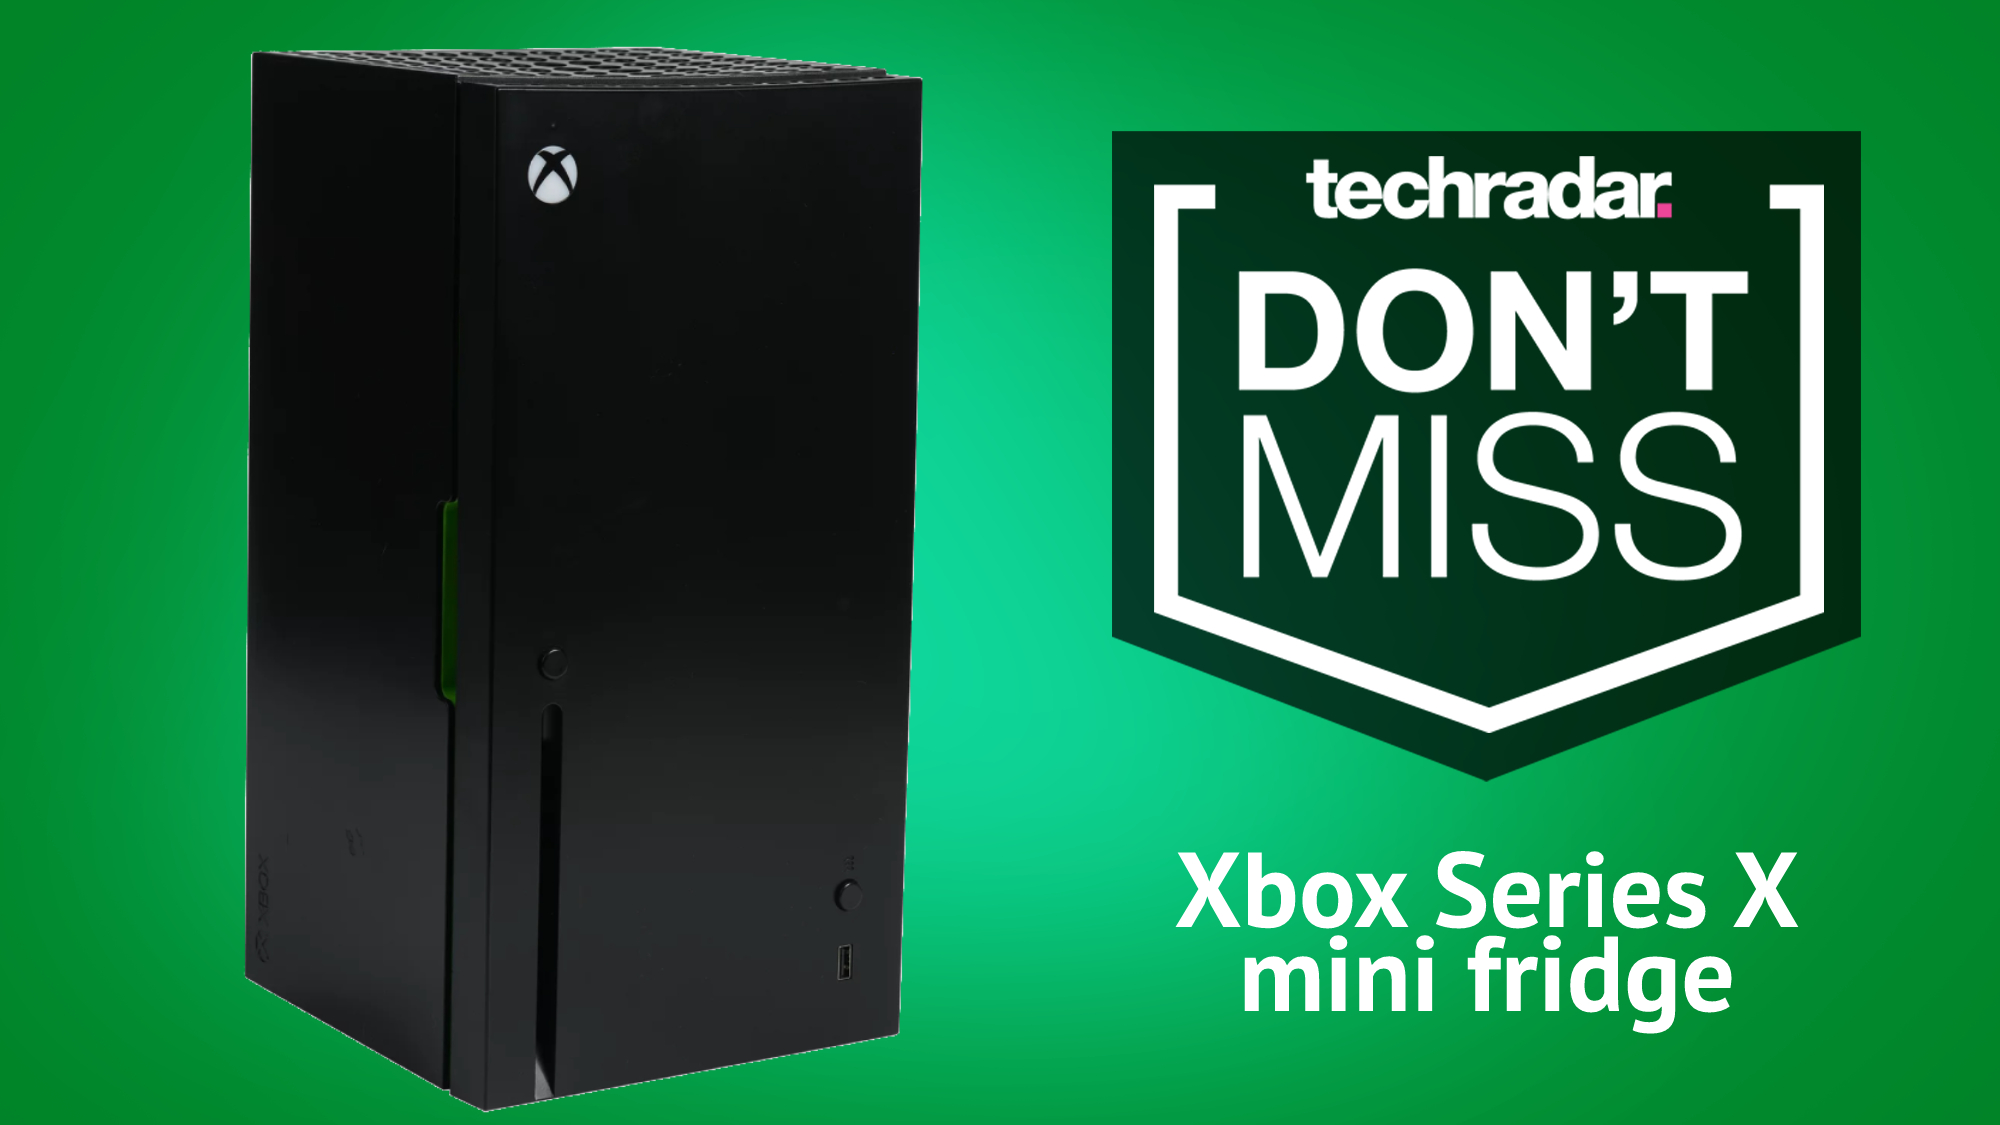 Xbox Mini Fridge Cyber Monday deal